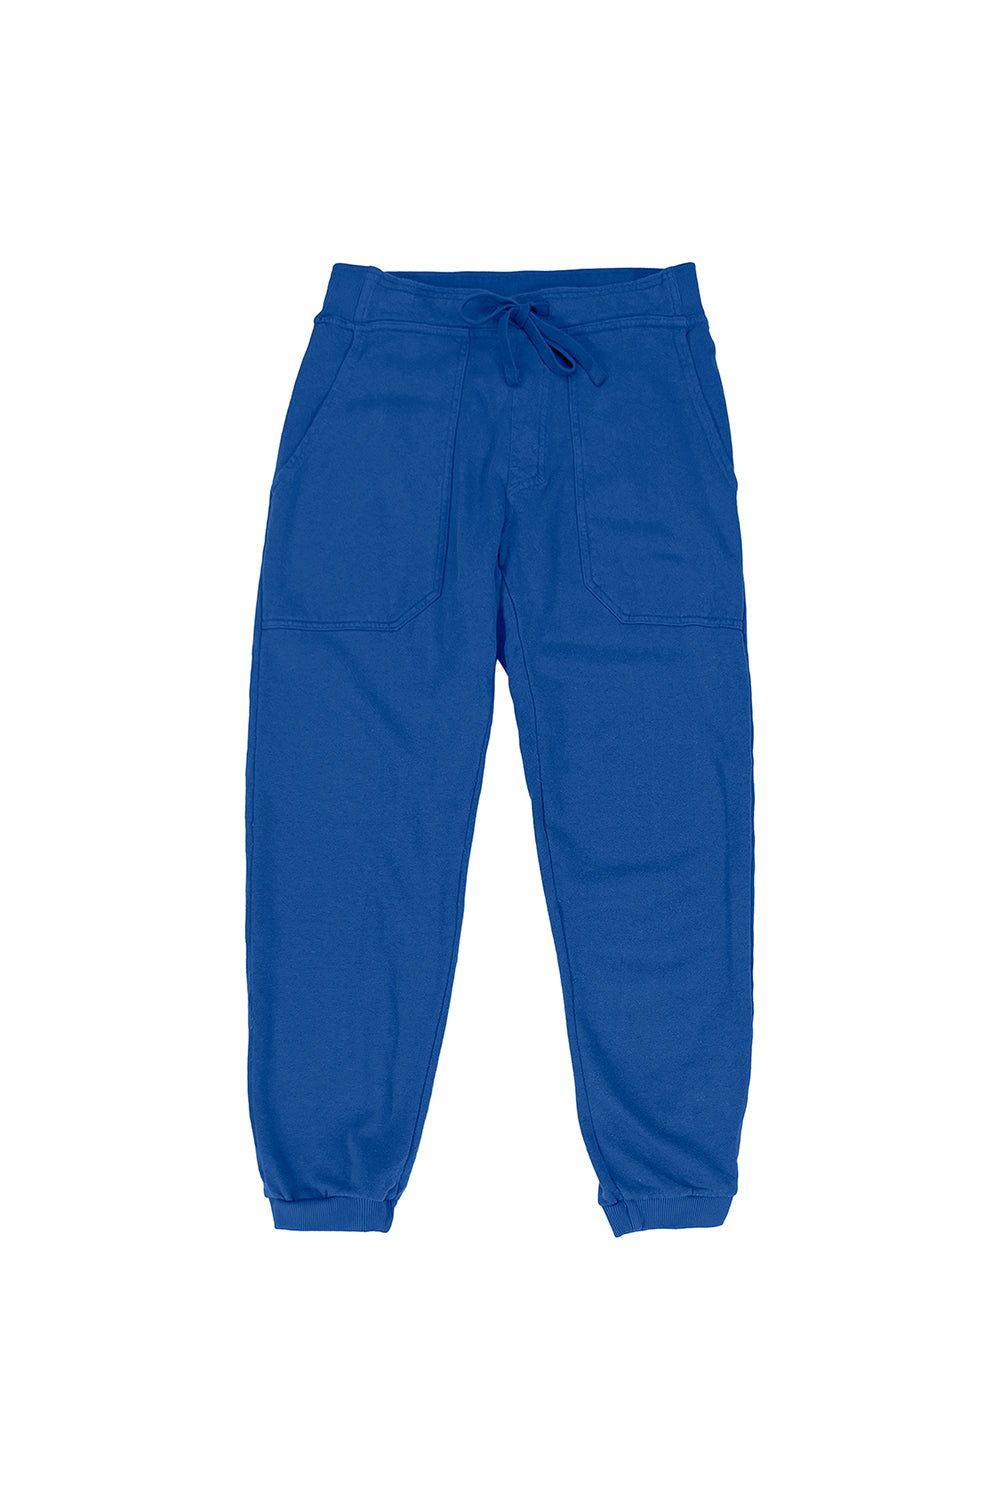 Rockaway Sweatpant | Jungmaven Hemp Clothing & Accessories / Color: Galaxy Blue